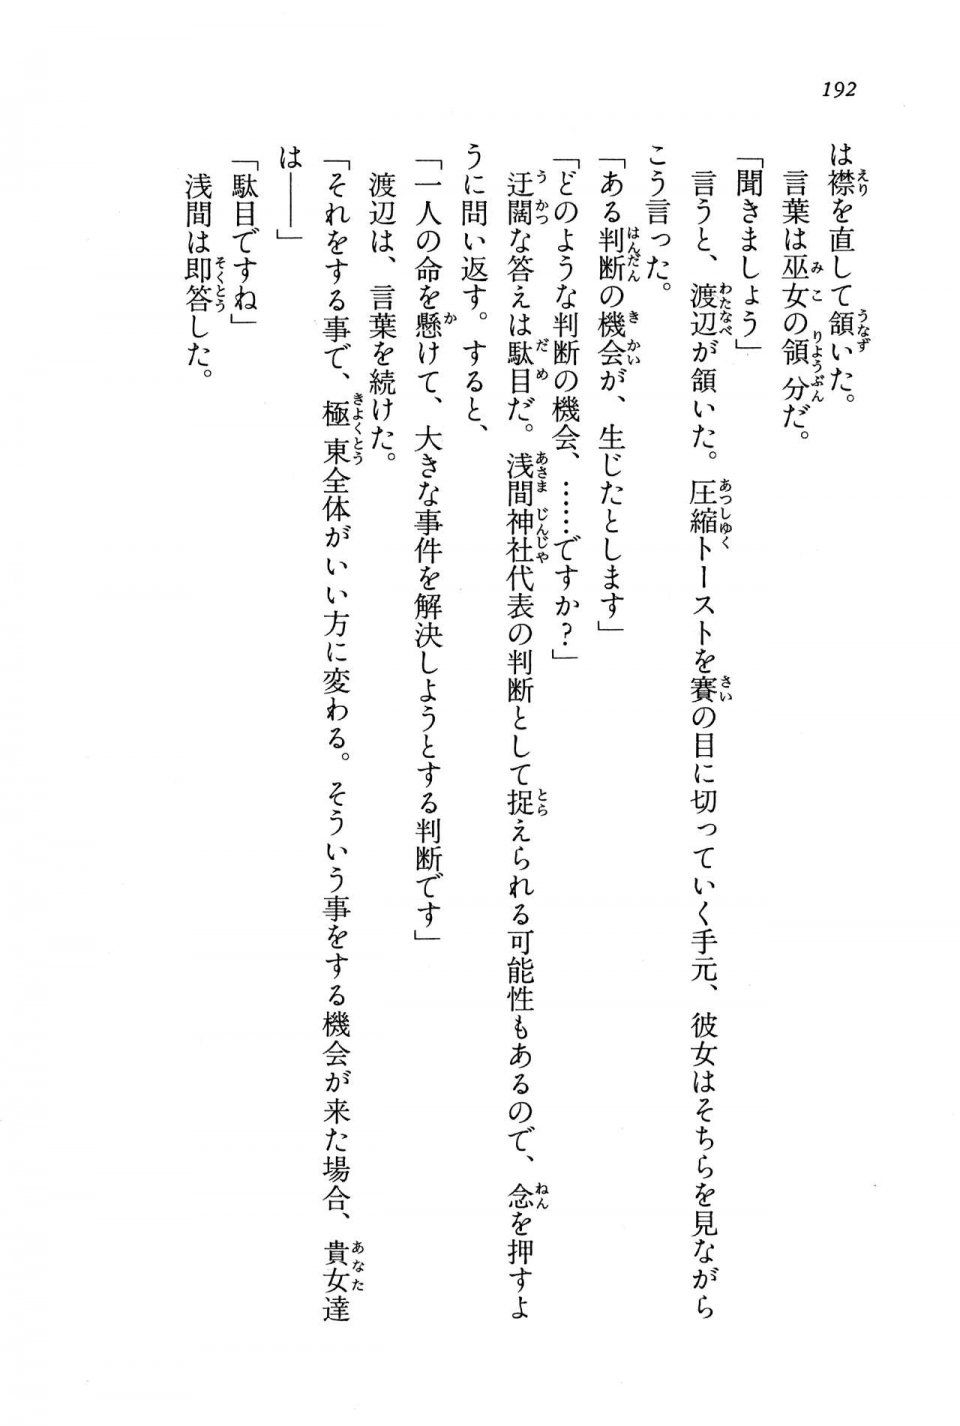 Kyoukai Senjou no Horizon BD Special Mininovel Vol 8(4B) - Photo #196